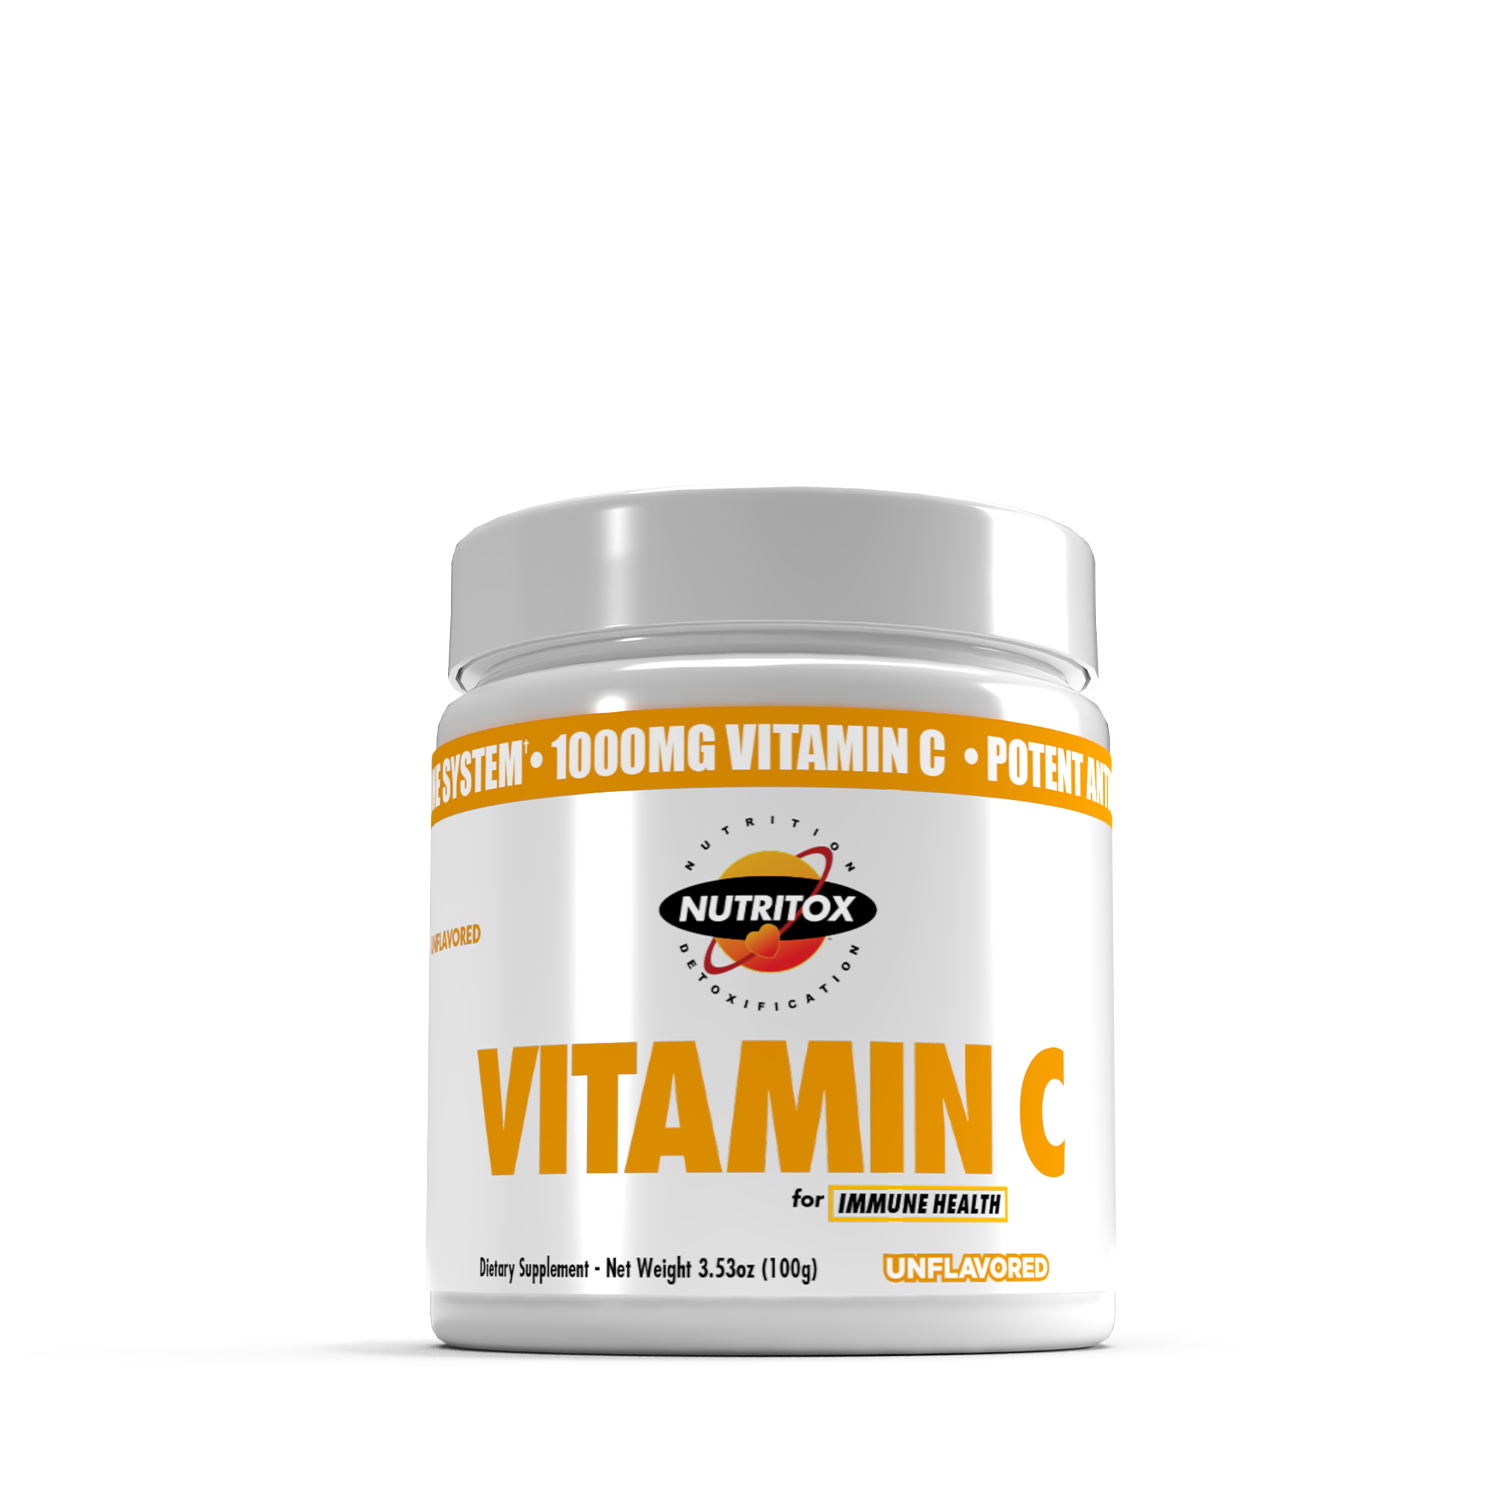 Vitamin C - 100 Servings (30% OFF)